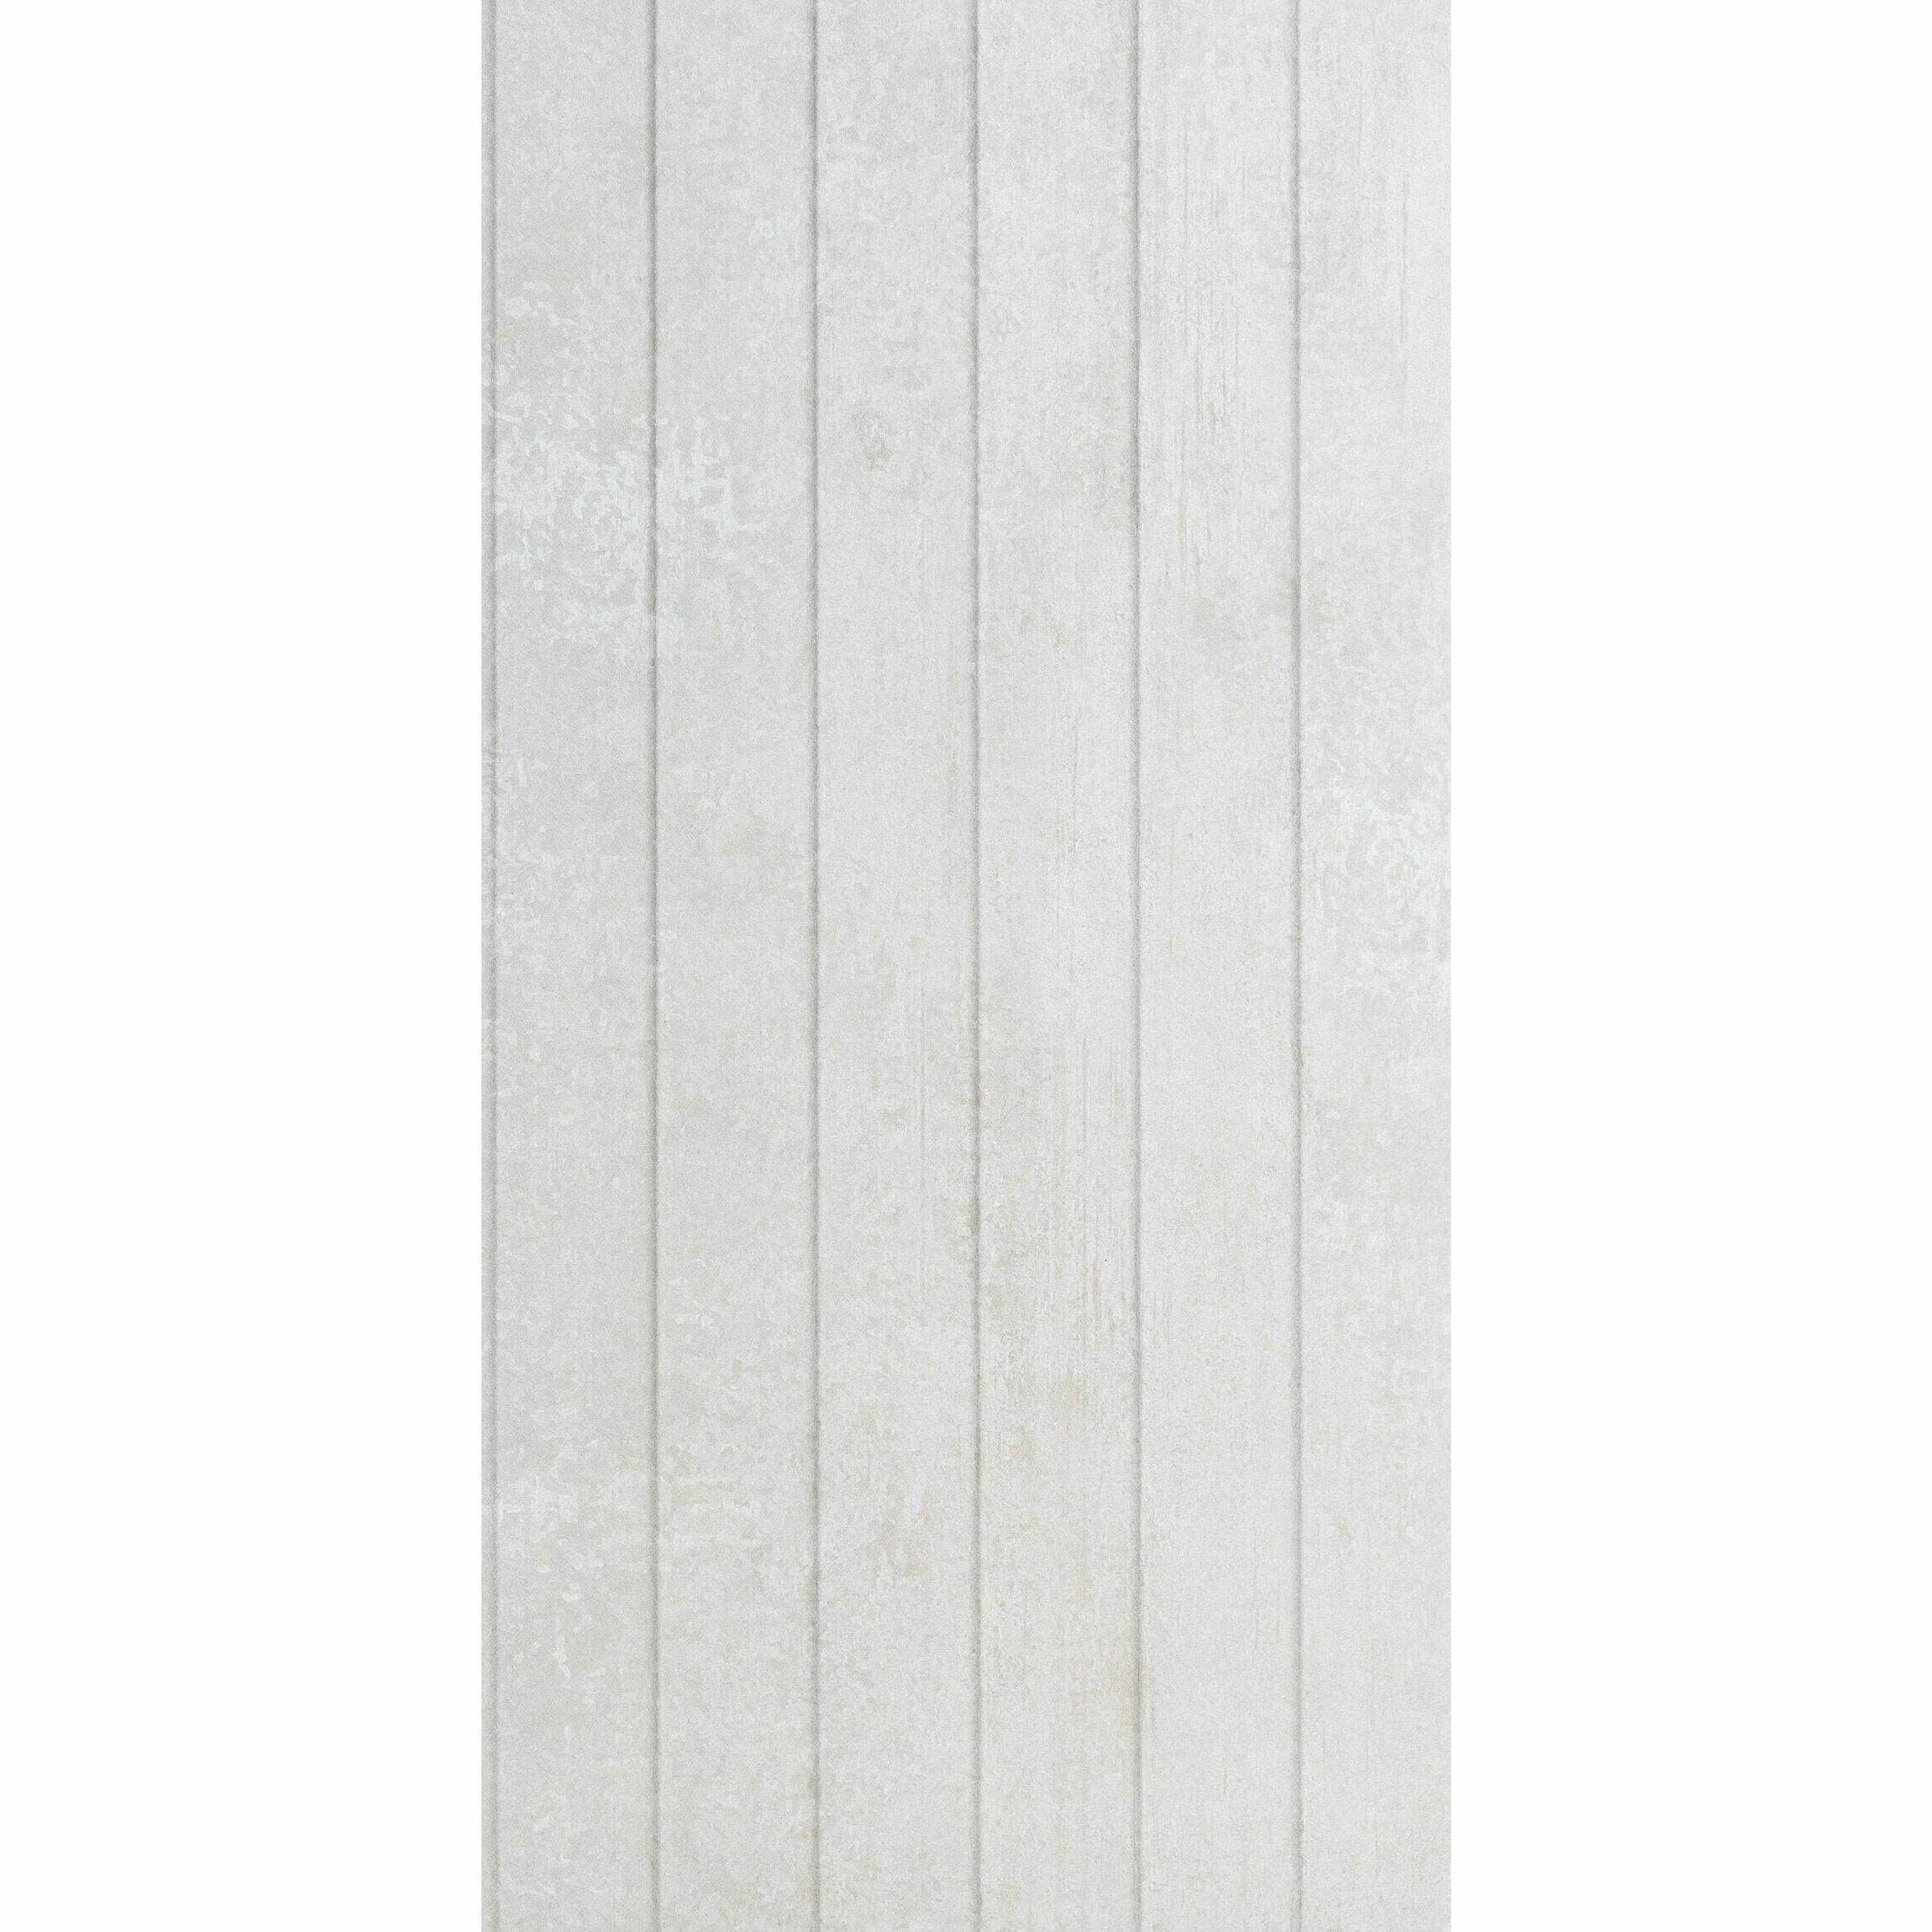 Porto White Matt Decor Concrete Effect Wall Tiles 300x600